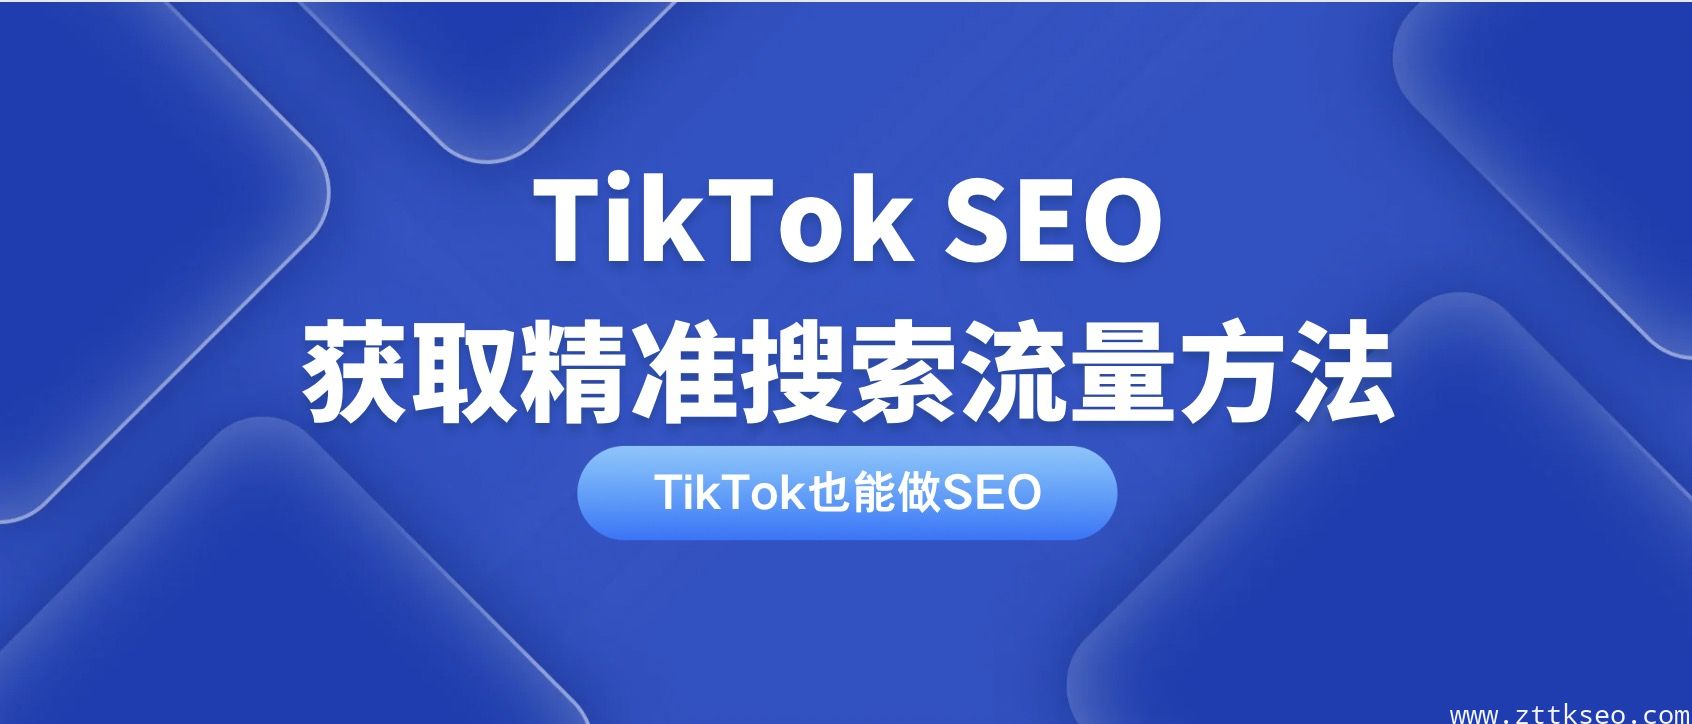 TikTok SEO获取精准搜索流量方法